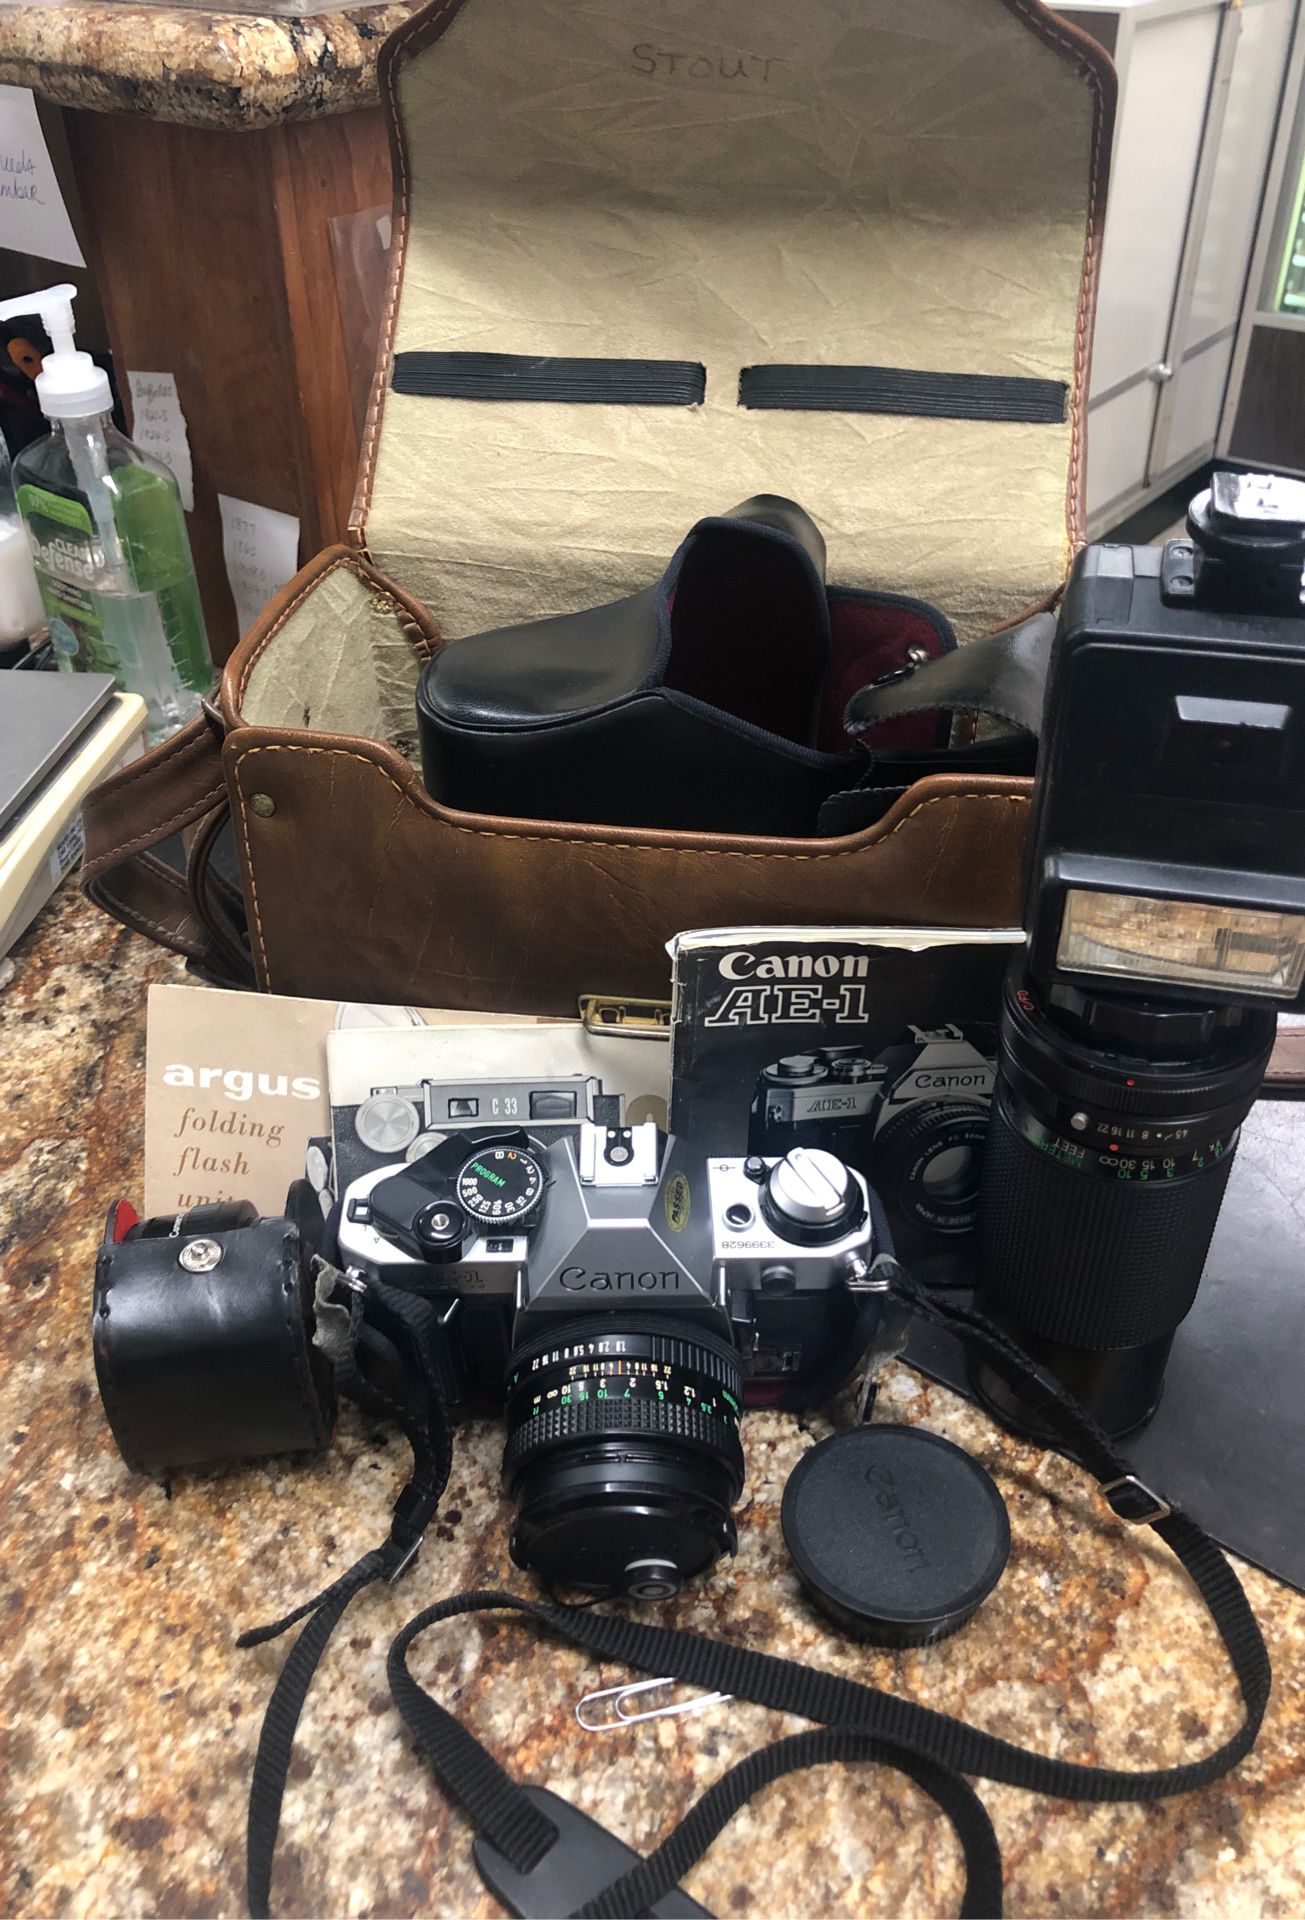 Canon AE-1 camera with three lenses, flash, original case and paperwork